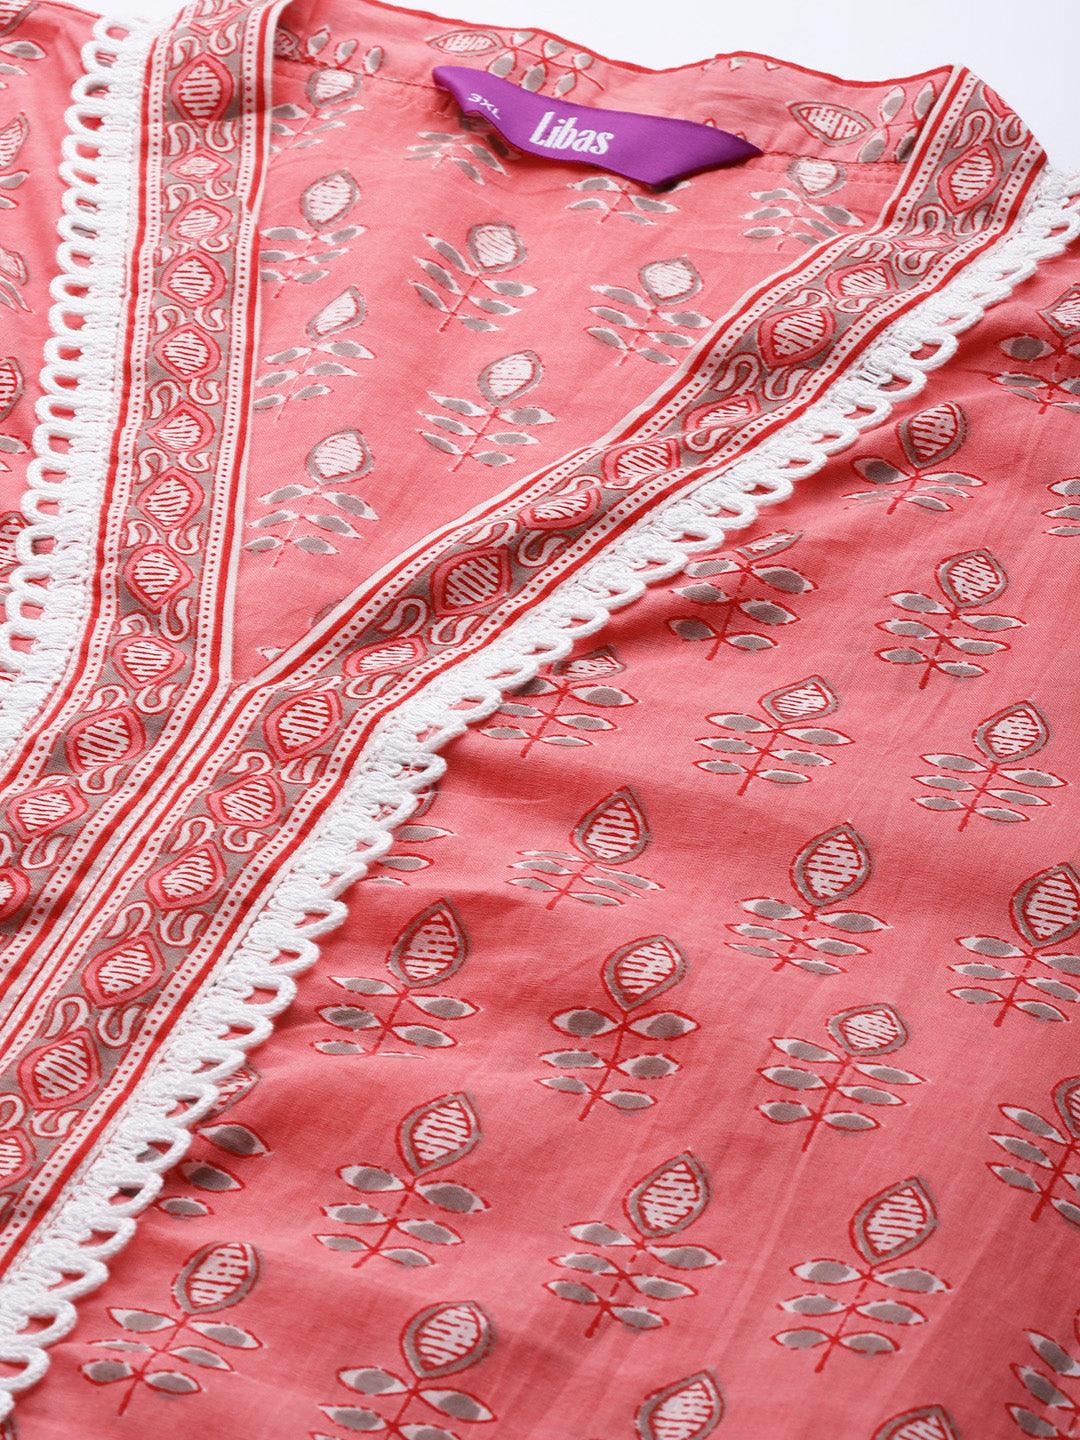 Plus Size Pink Printed Cotton Straight Kurta With Palazzos & Dupatta